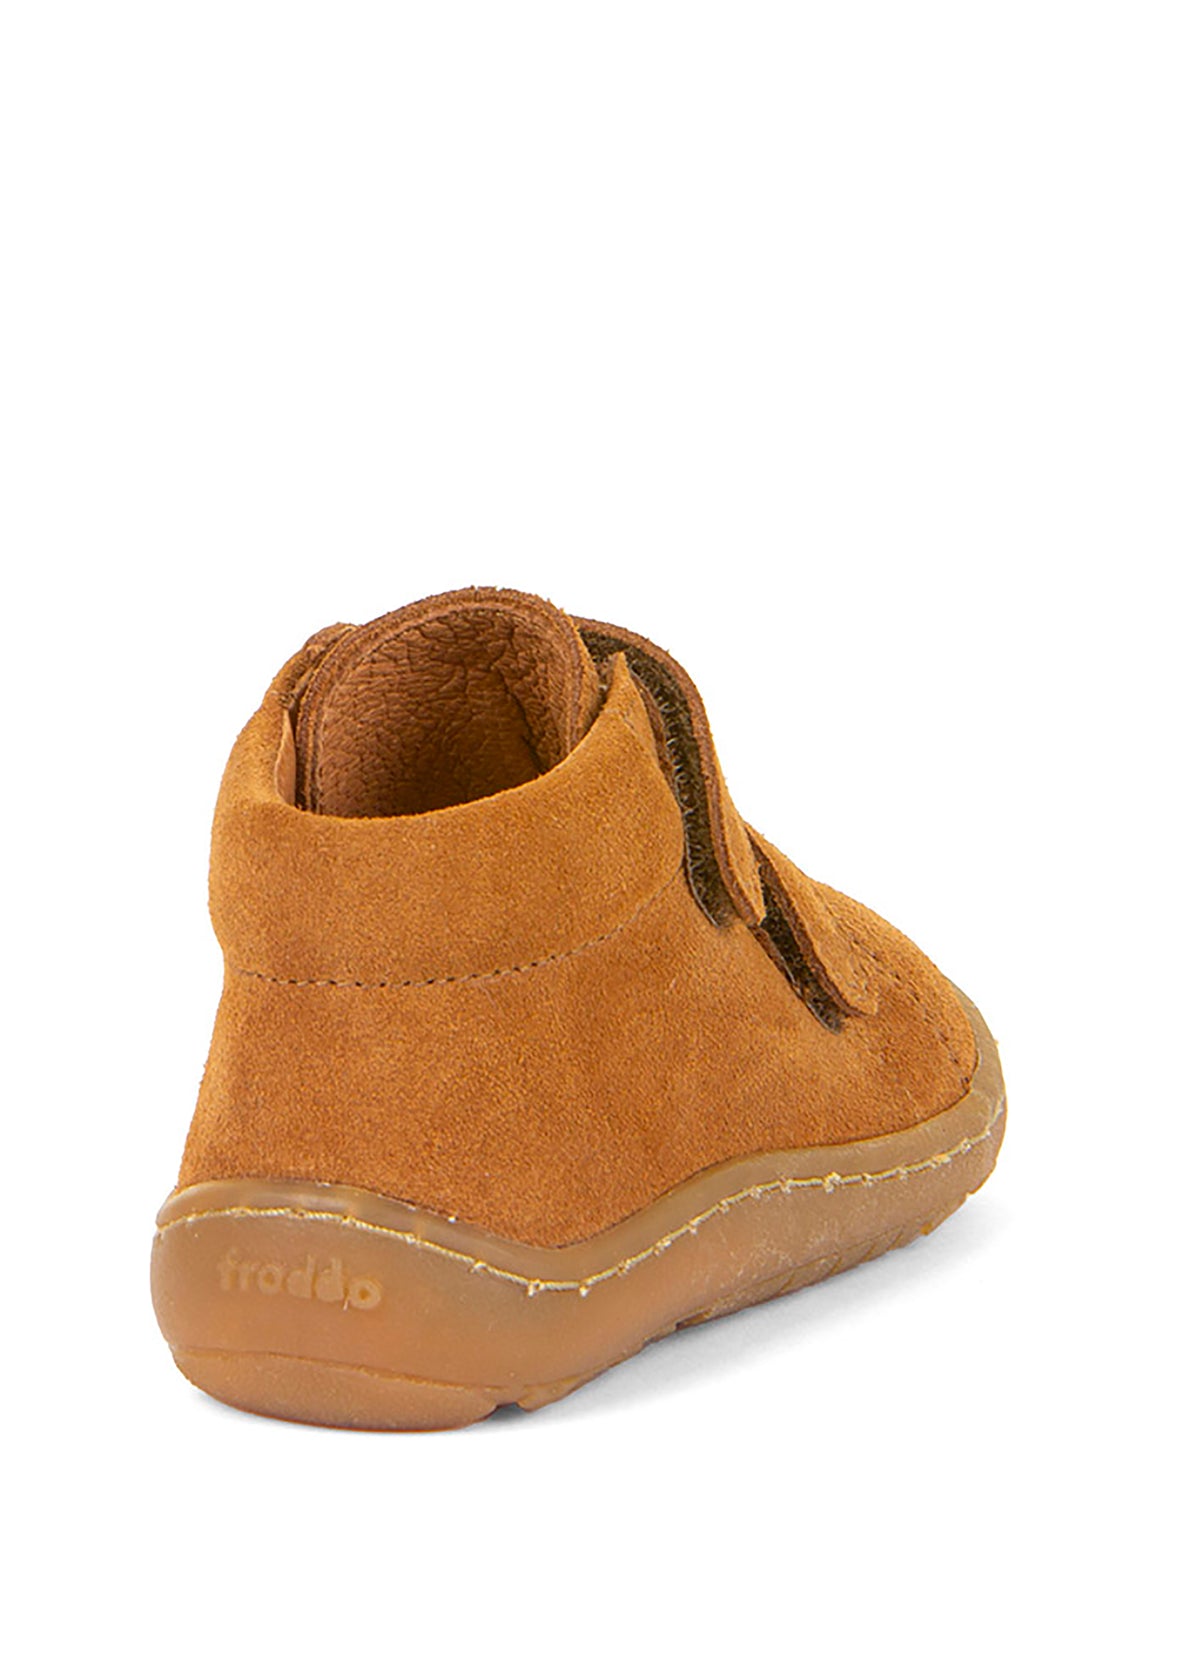 Barfotaskor för barn - konjaksbrun mocka, Barefoot First Step